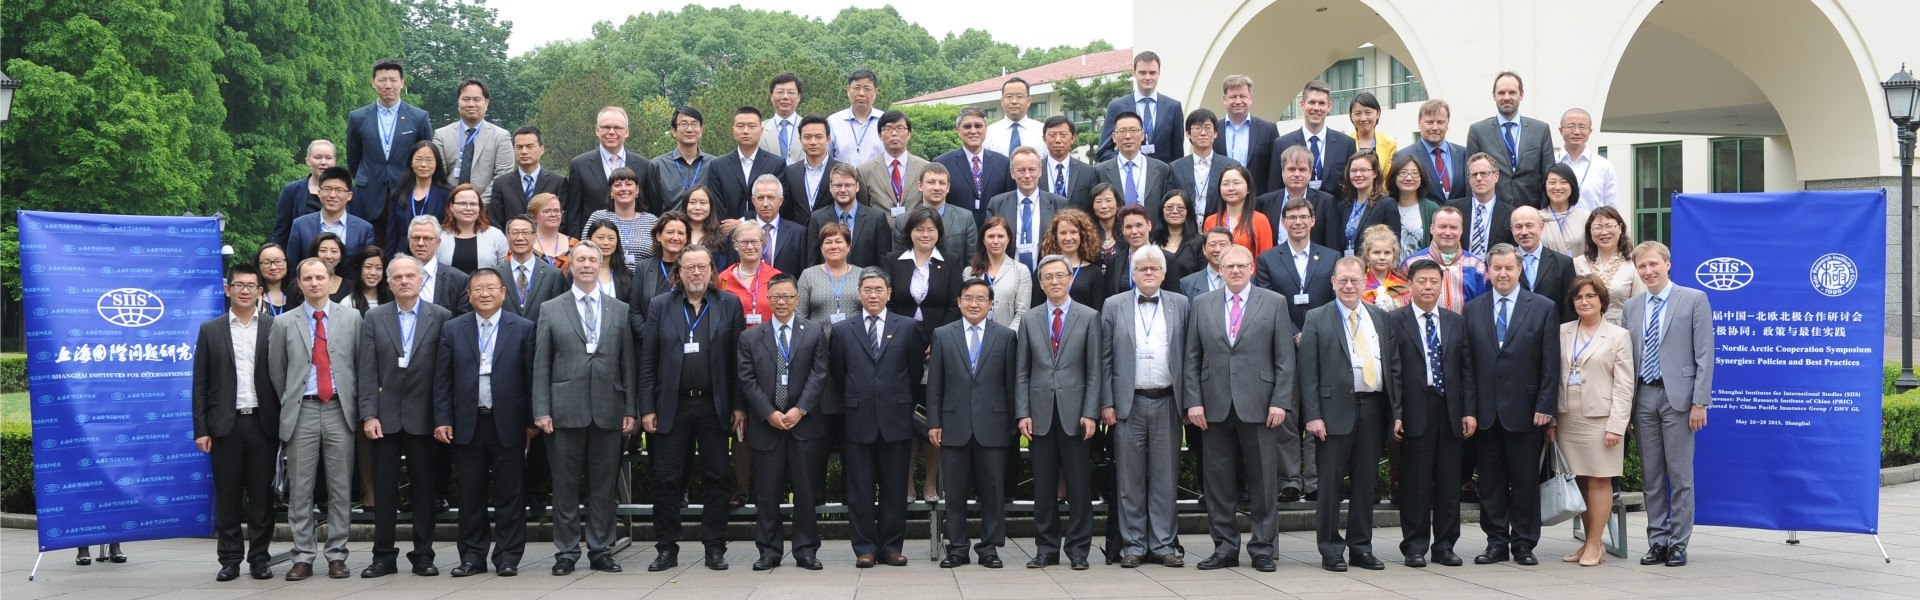 3rd CNARC Symposium Attendees